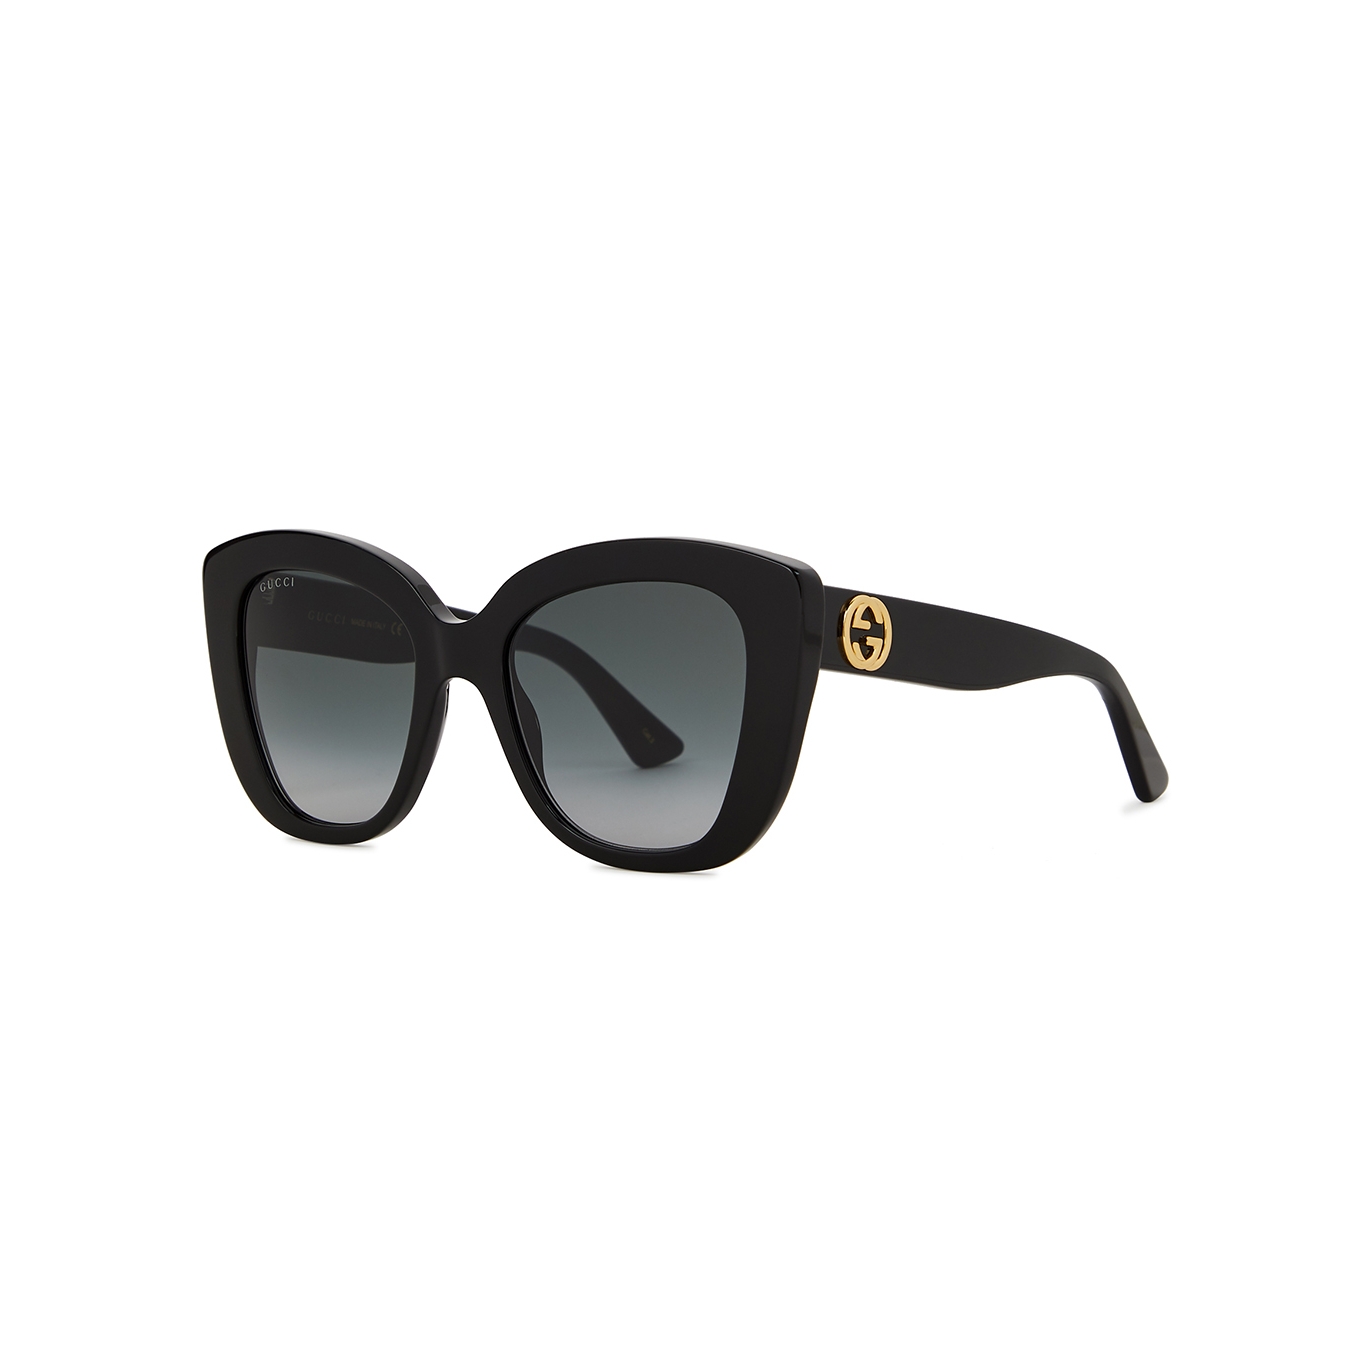 Gucci Black Oversized Cat-eye Sunglasses, Sunglasses, Black, Oversized